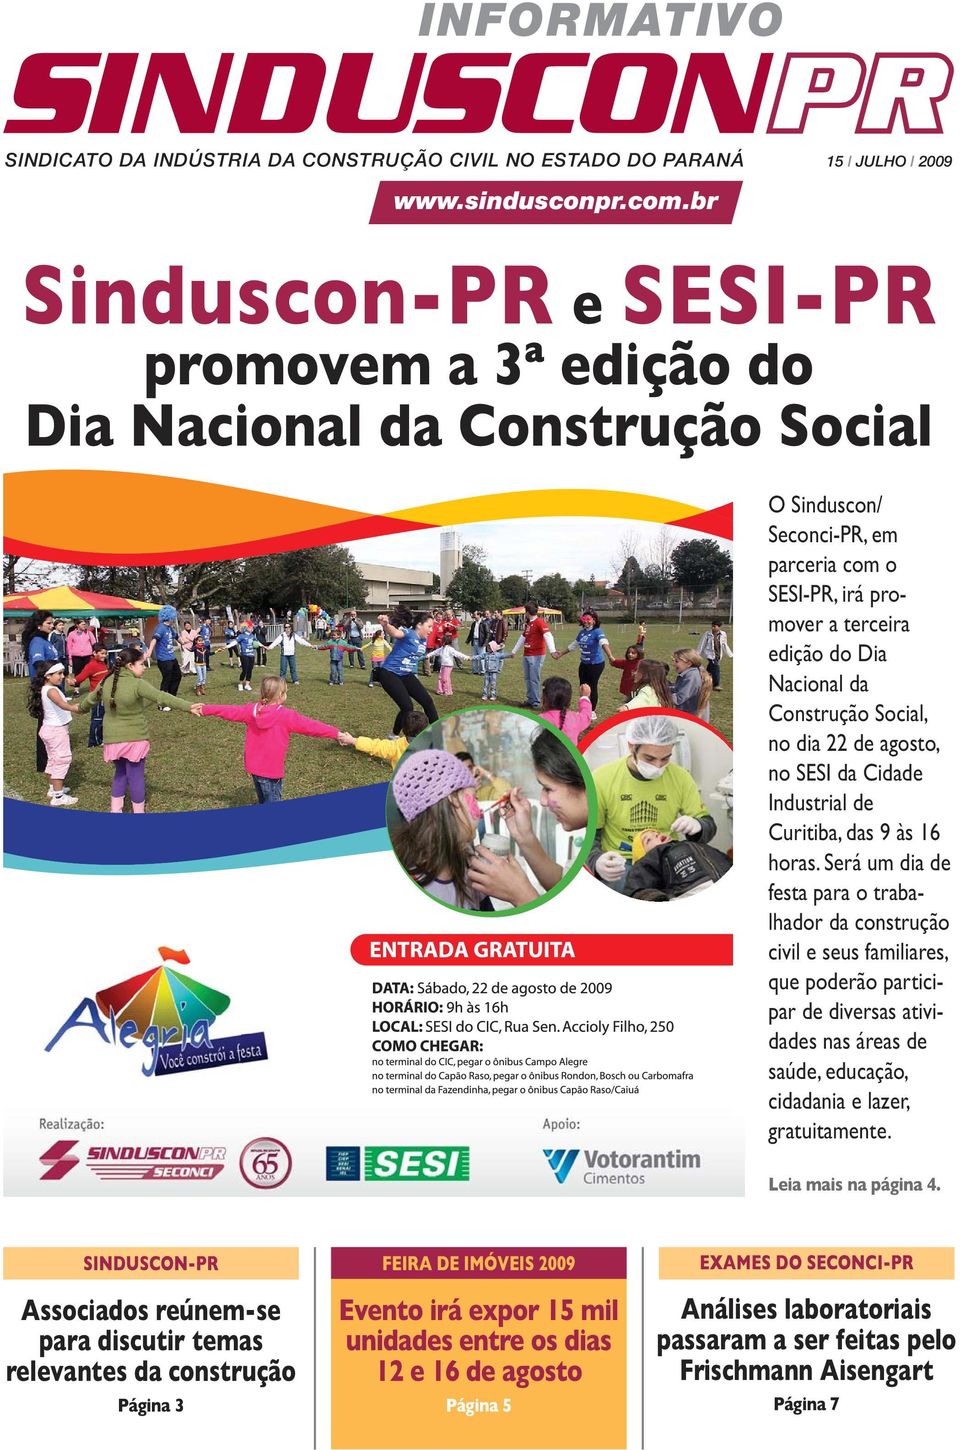 Social, no dia 22 de agosto, no SESI da Cidade Industrial de Curitiba, das 9 às 16 horas.